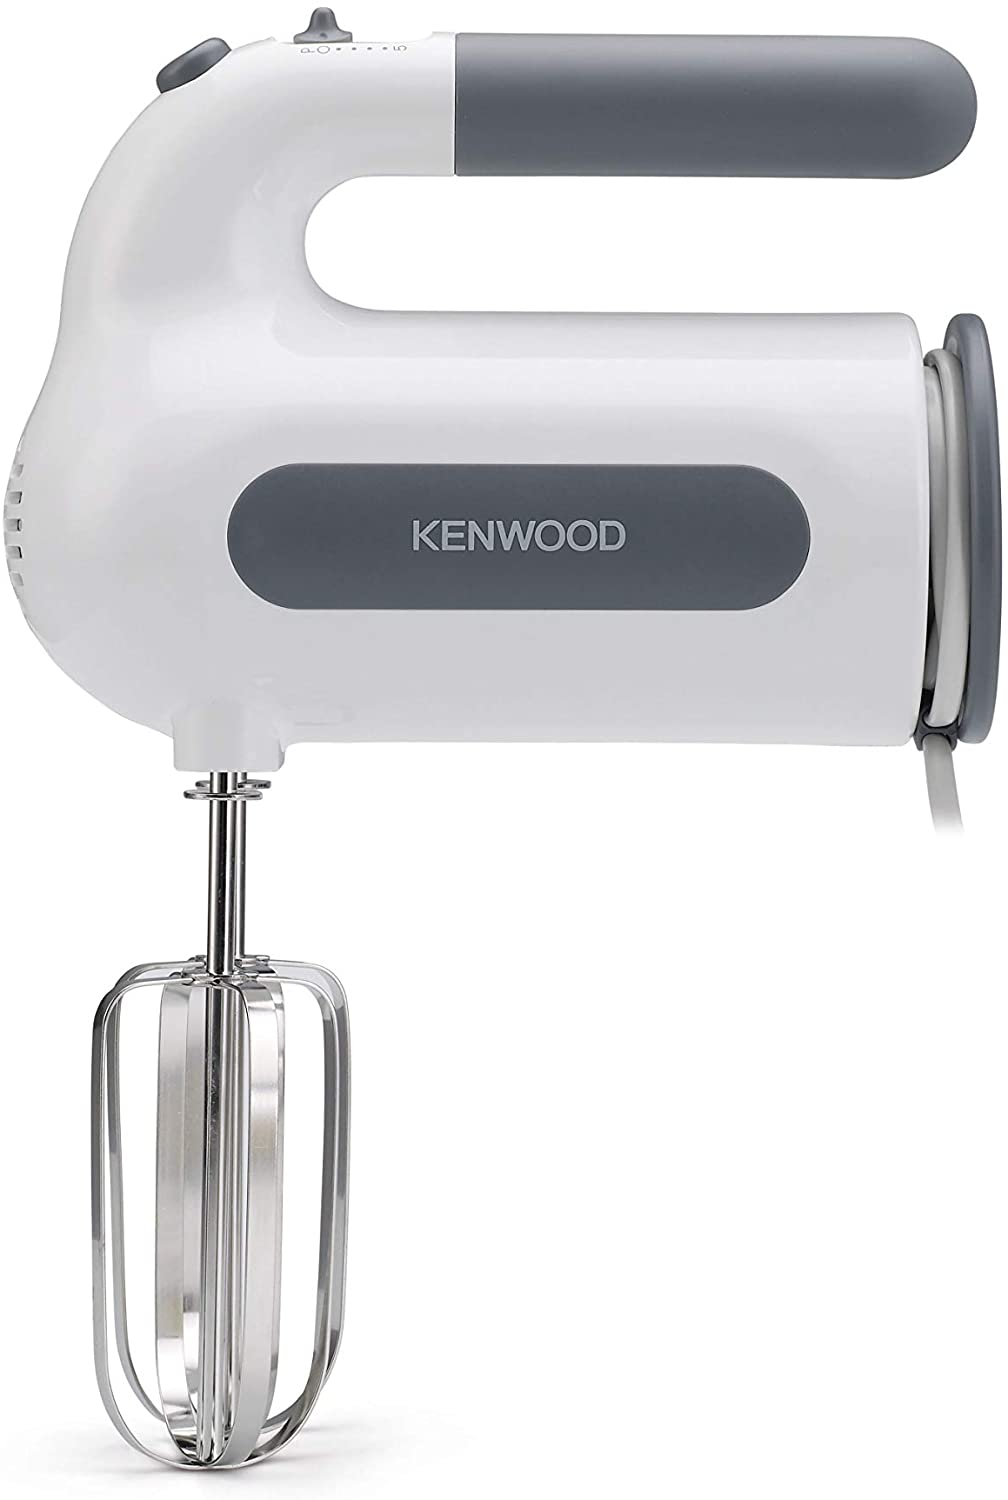 DeLonghi Kenwood HM620 Handmixer, 350 W, 5 Speeds, White